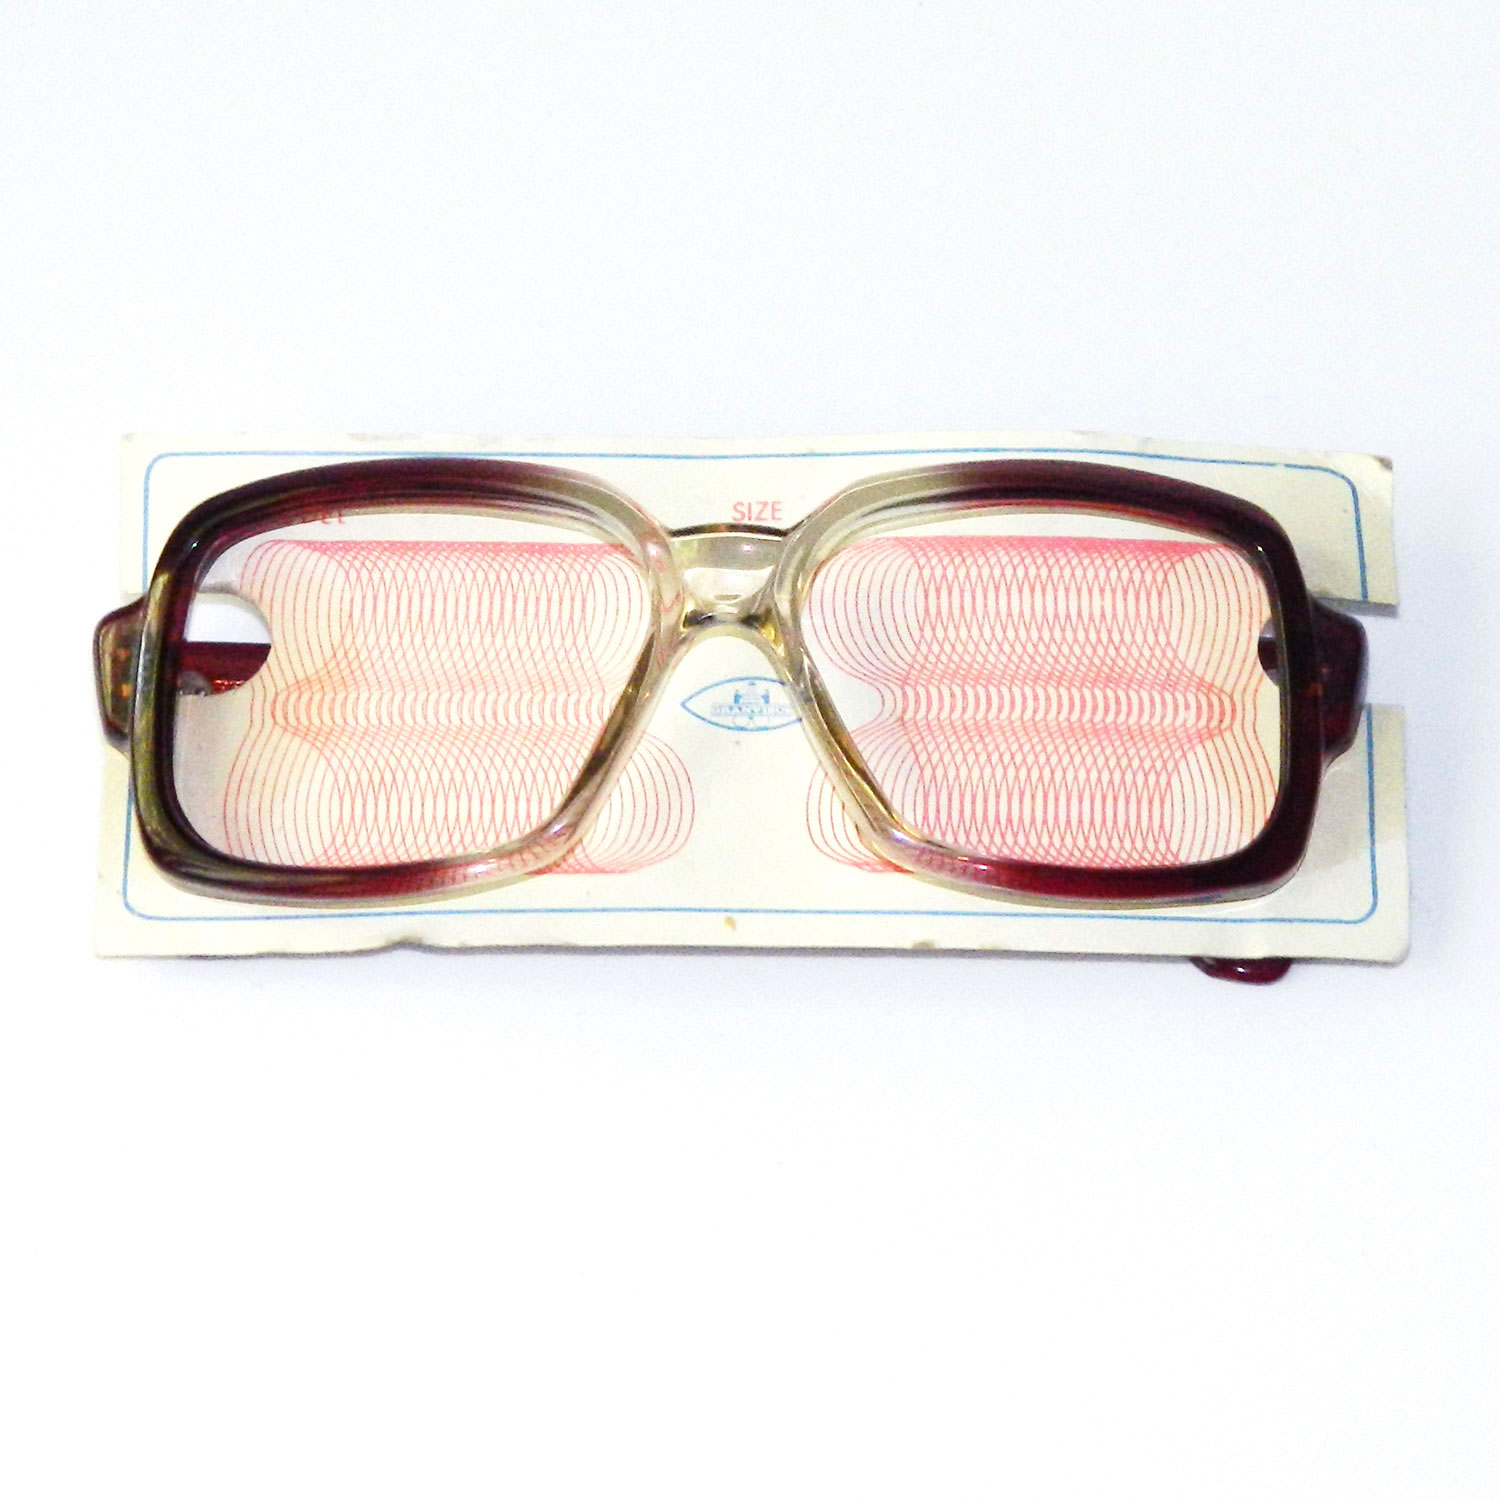 1970s eyeglasses